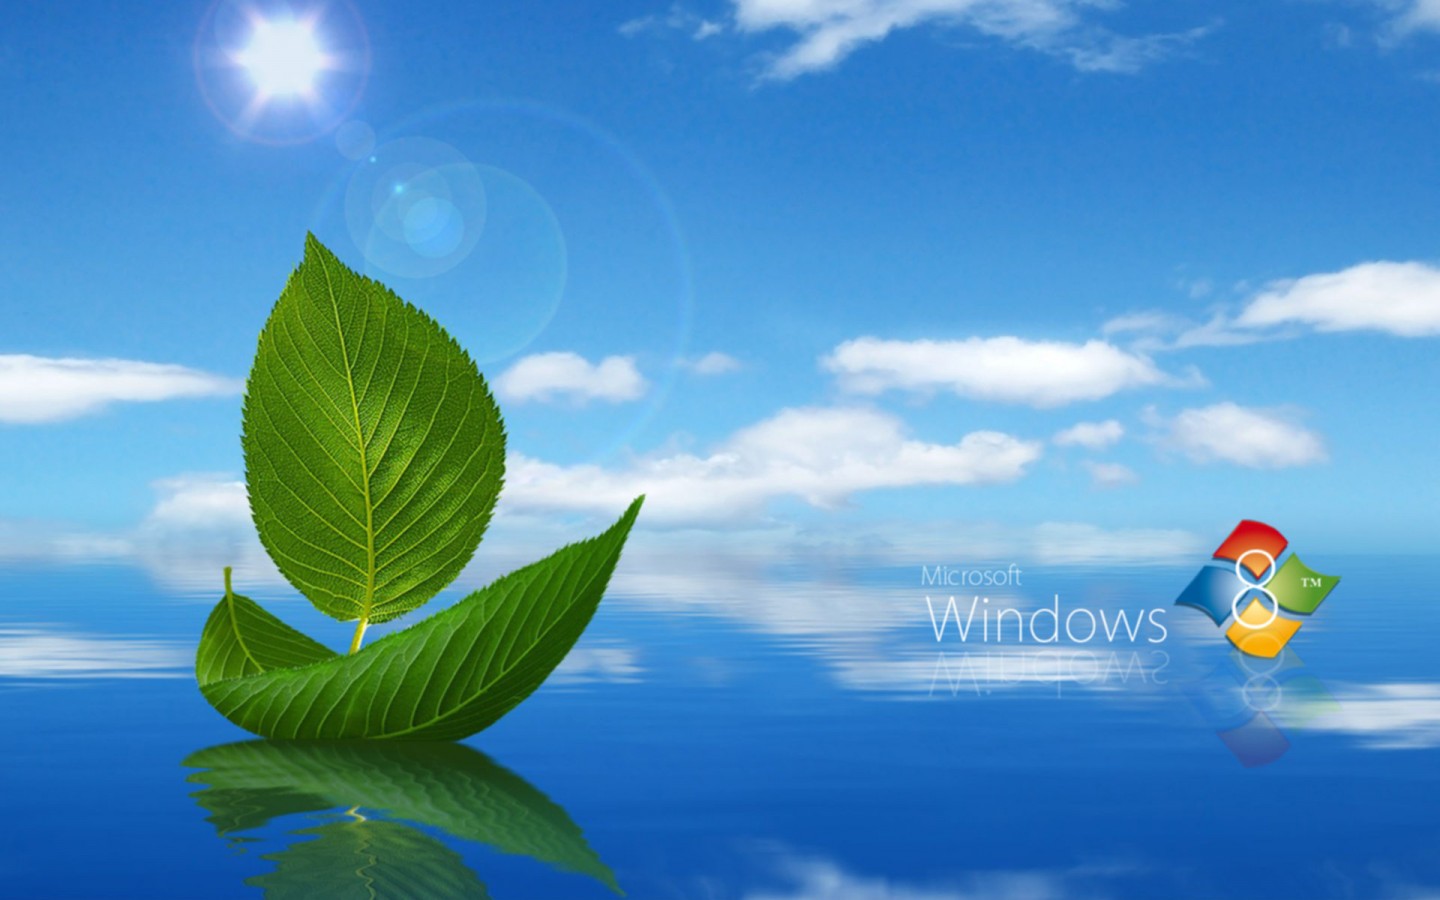 Free download Windows 8 Full Wallpaper HD Windows 8 Wallpaper HD